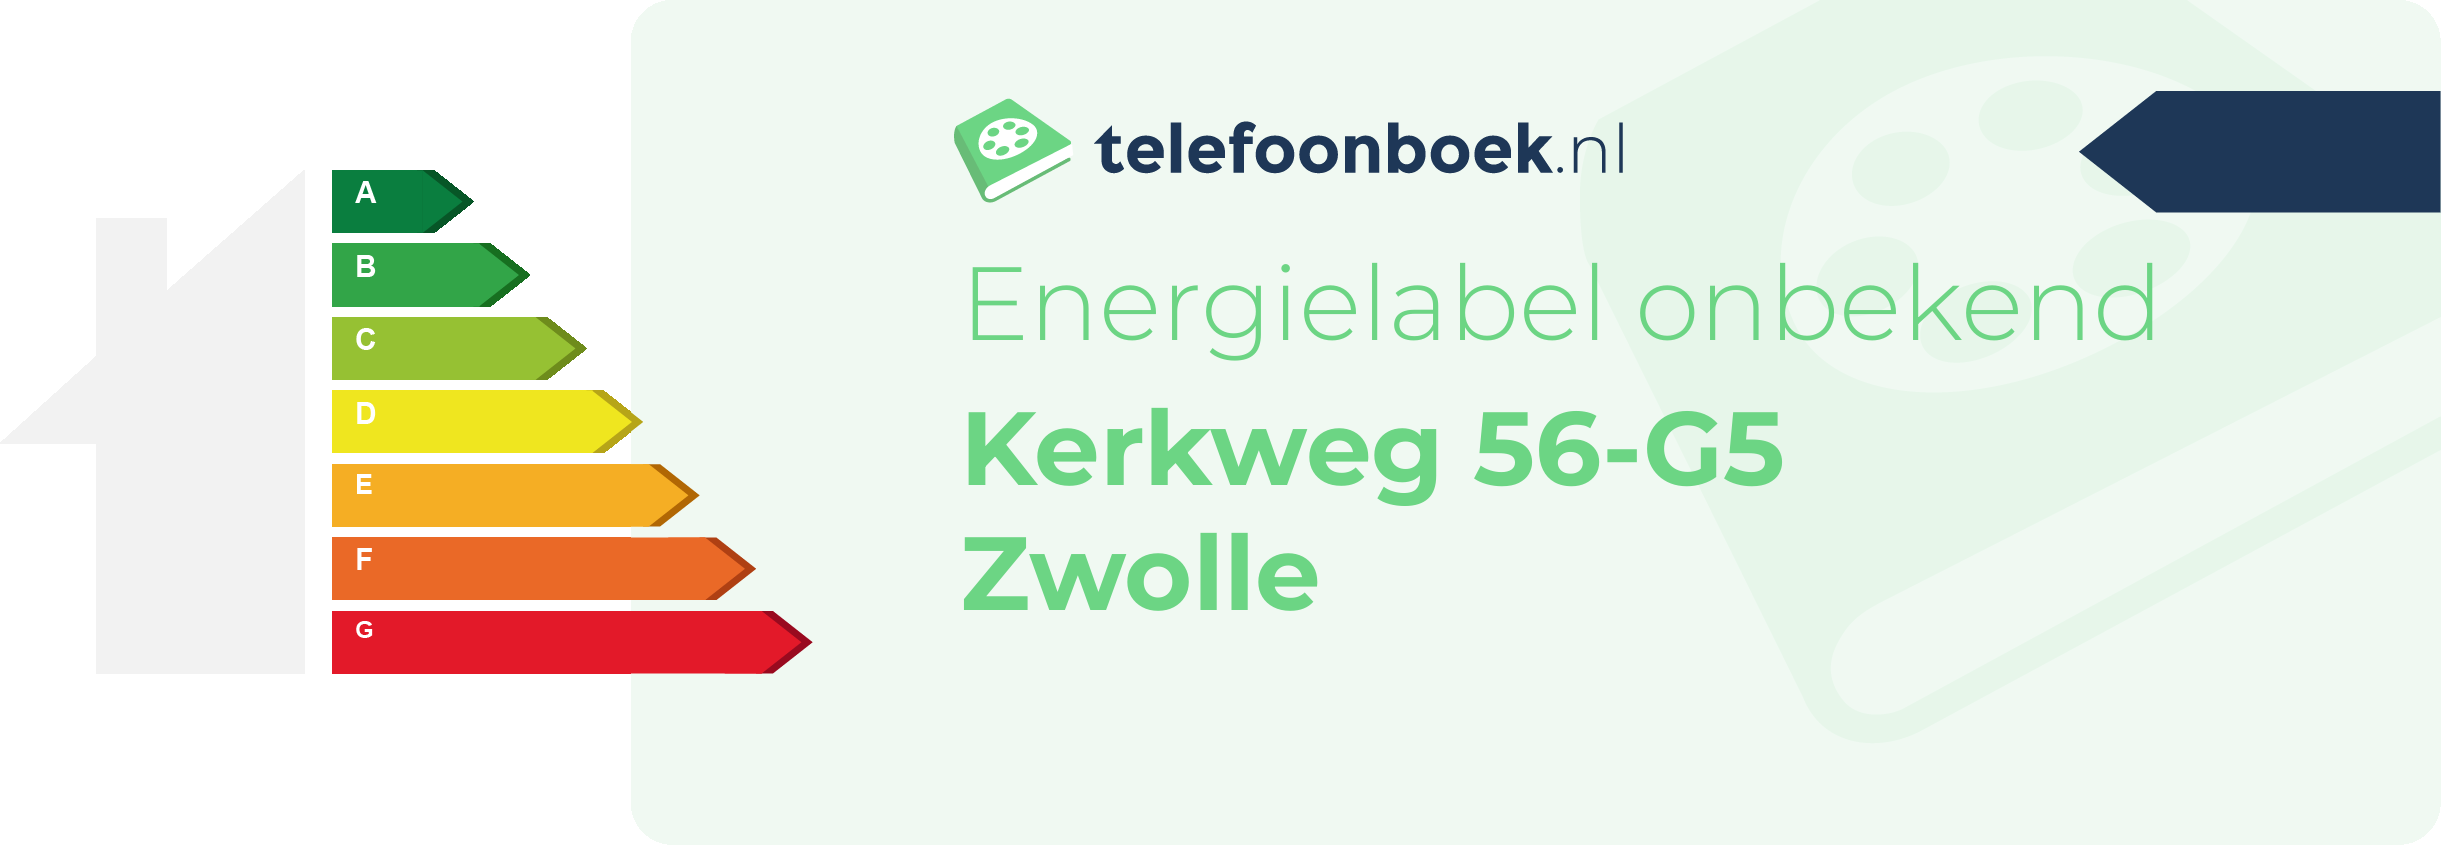 Energielabel Kerkweg 56-G5 Zwolle